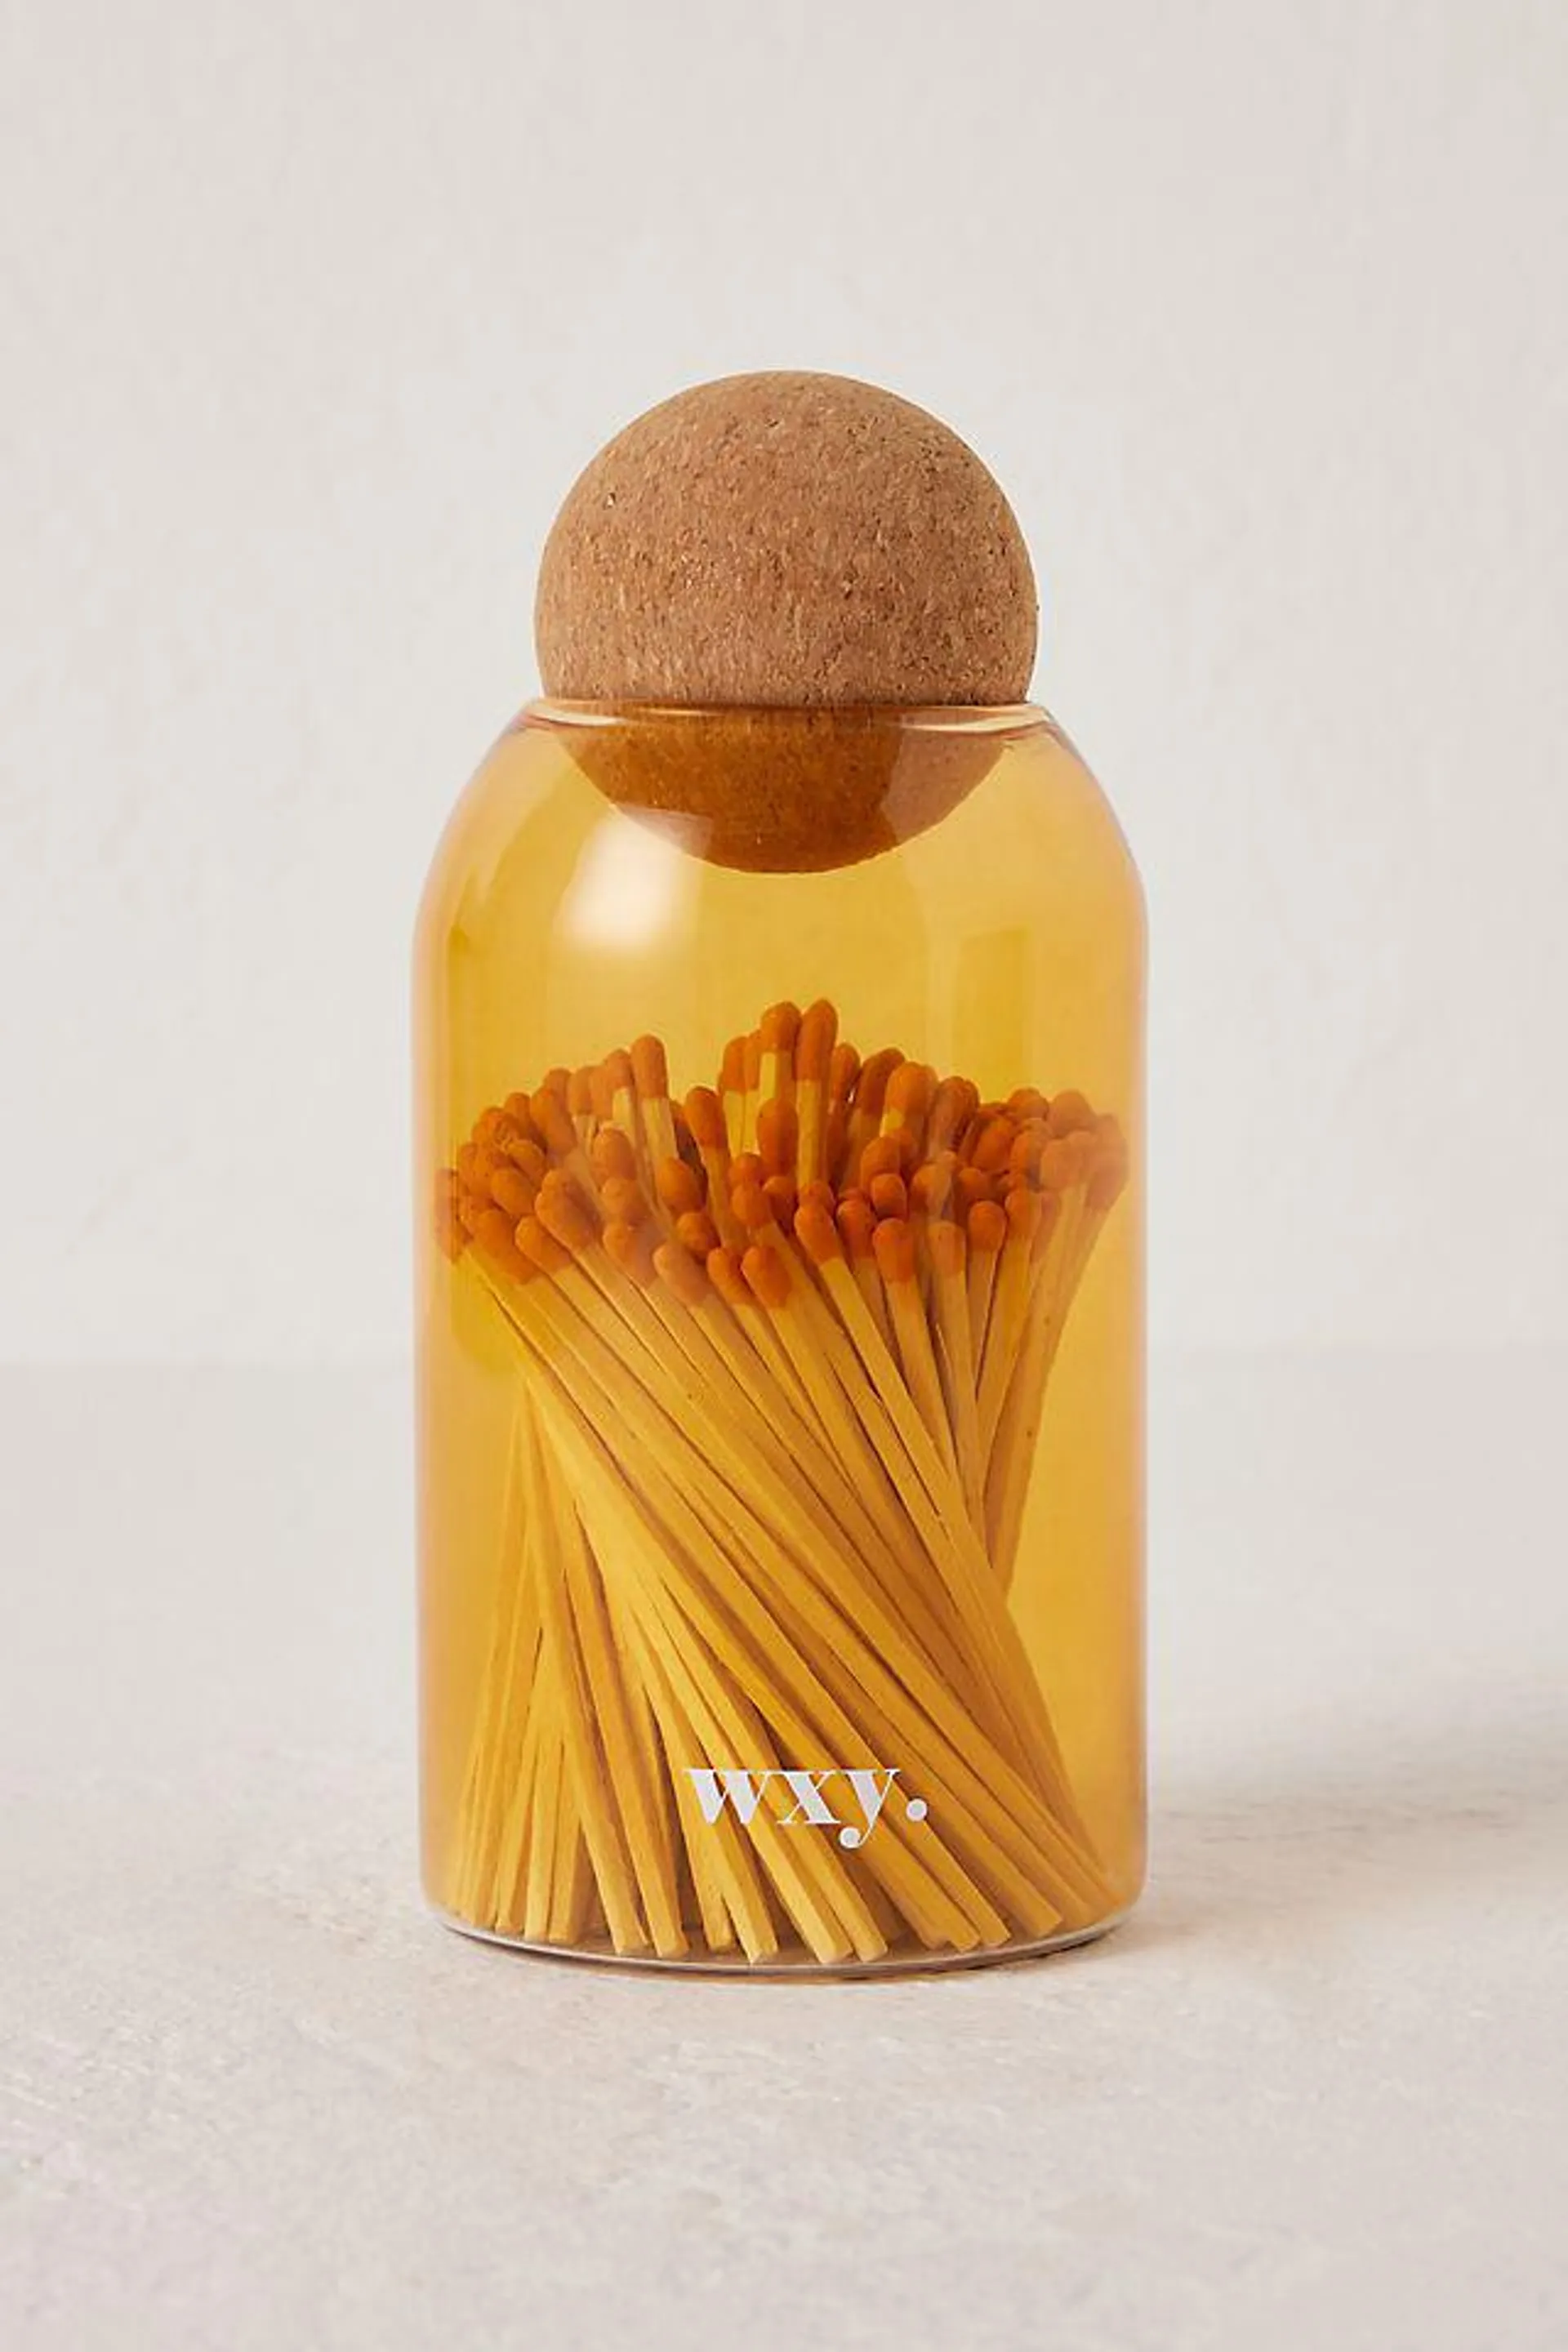 wxy. Matches Jar